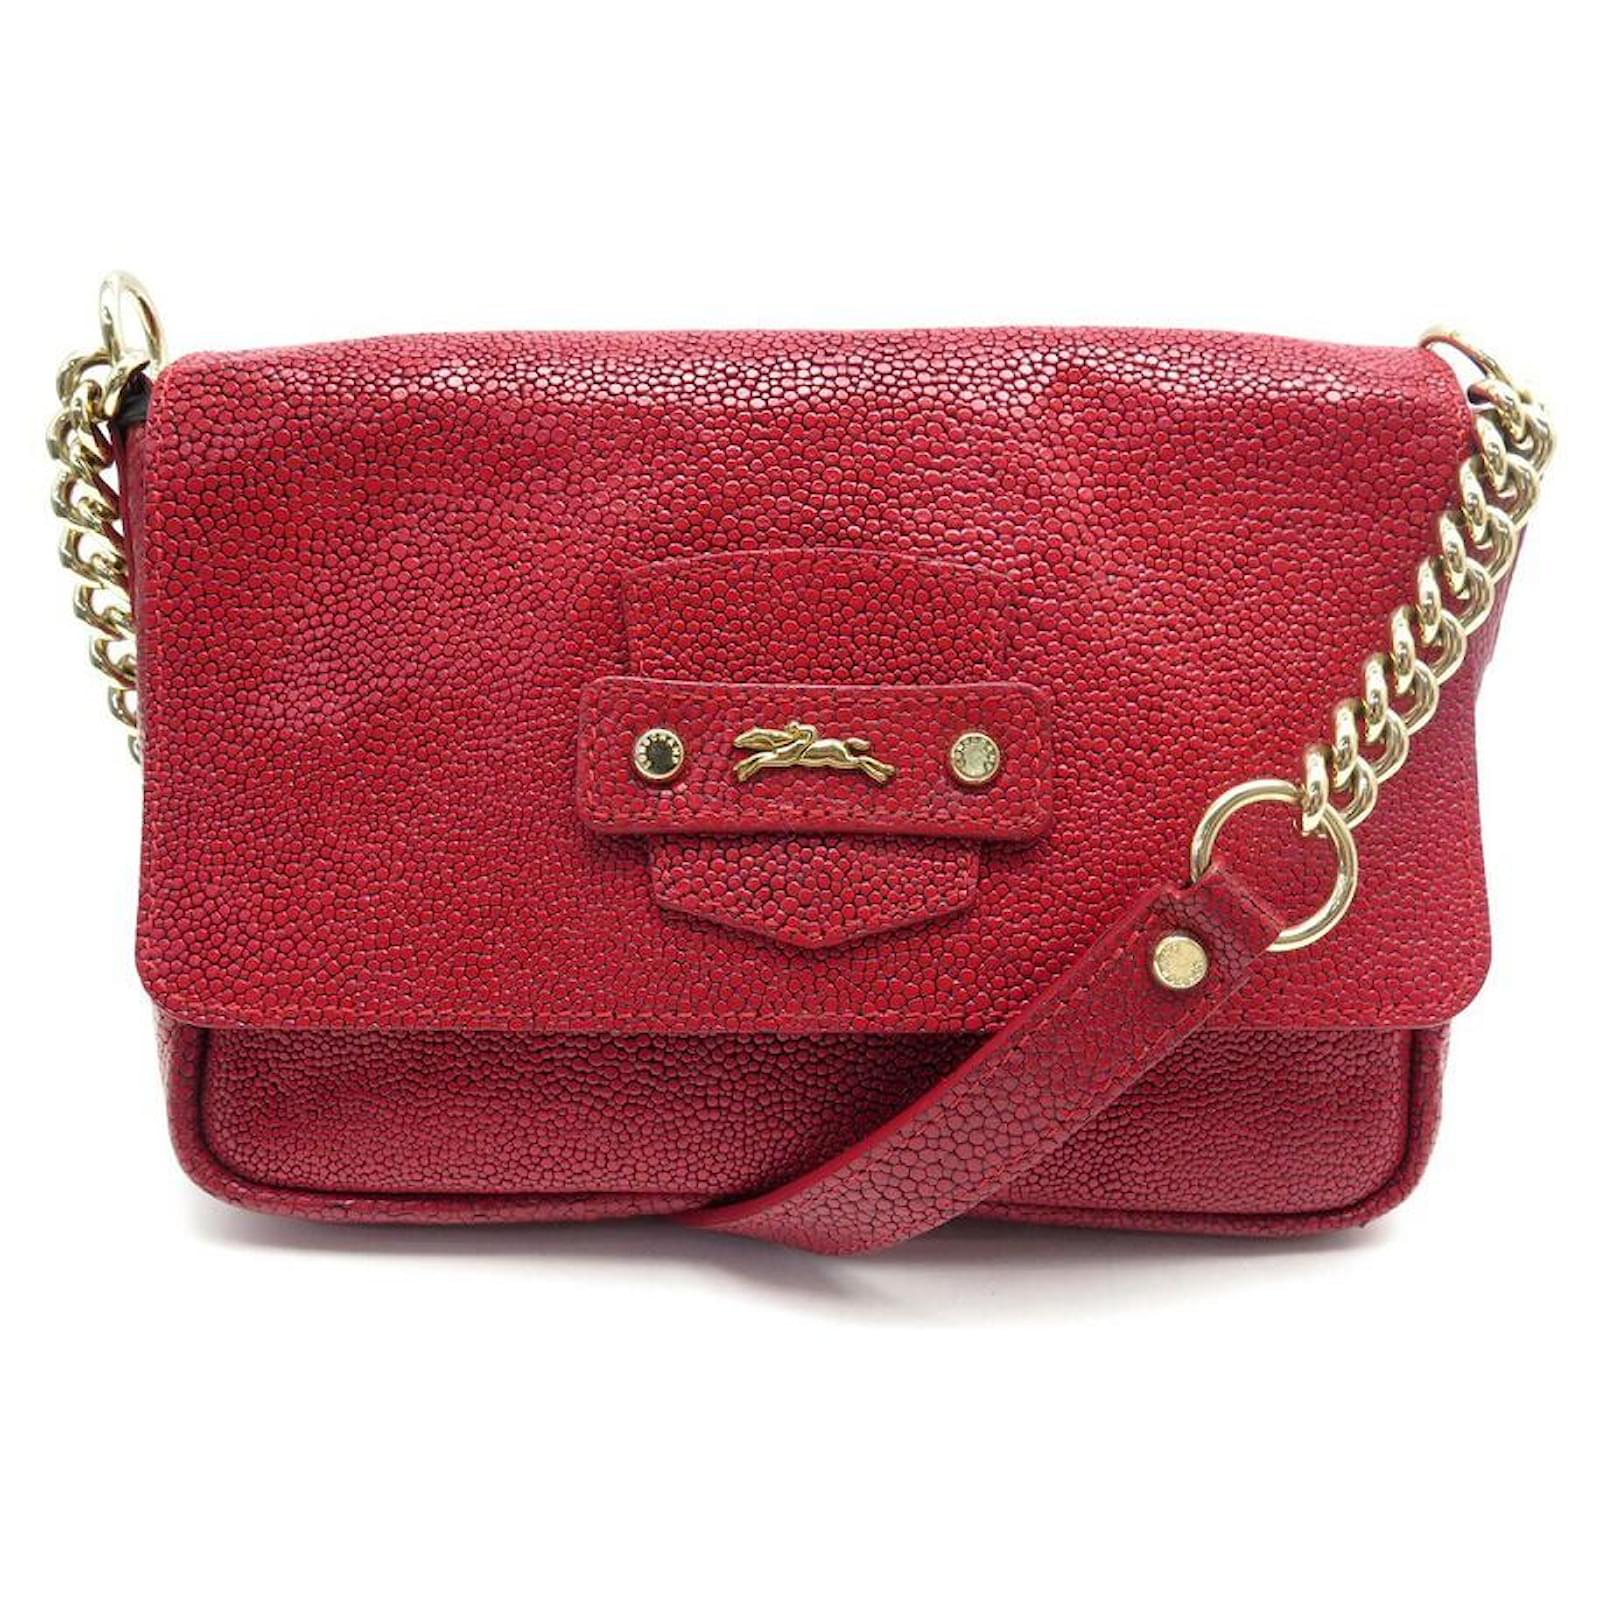 Longchamp, Bags, Longchamp Red Leather Hobo Bag